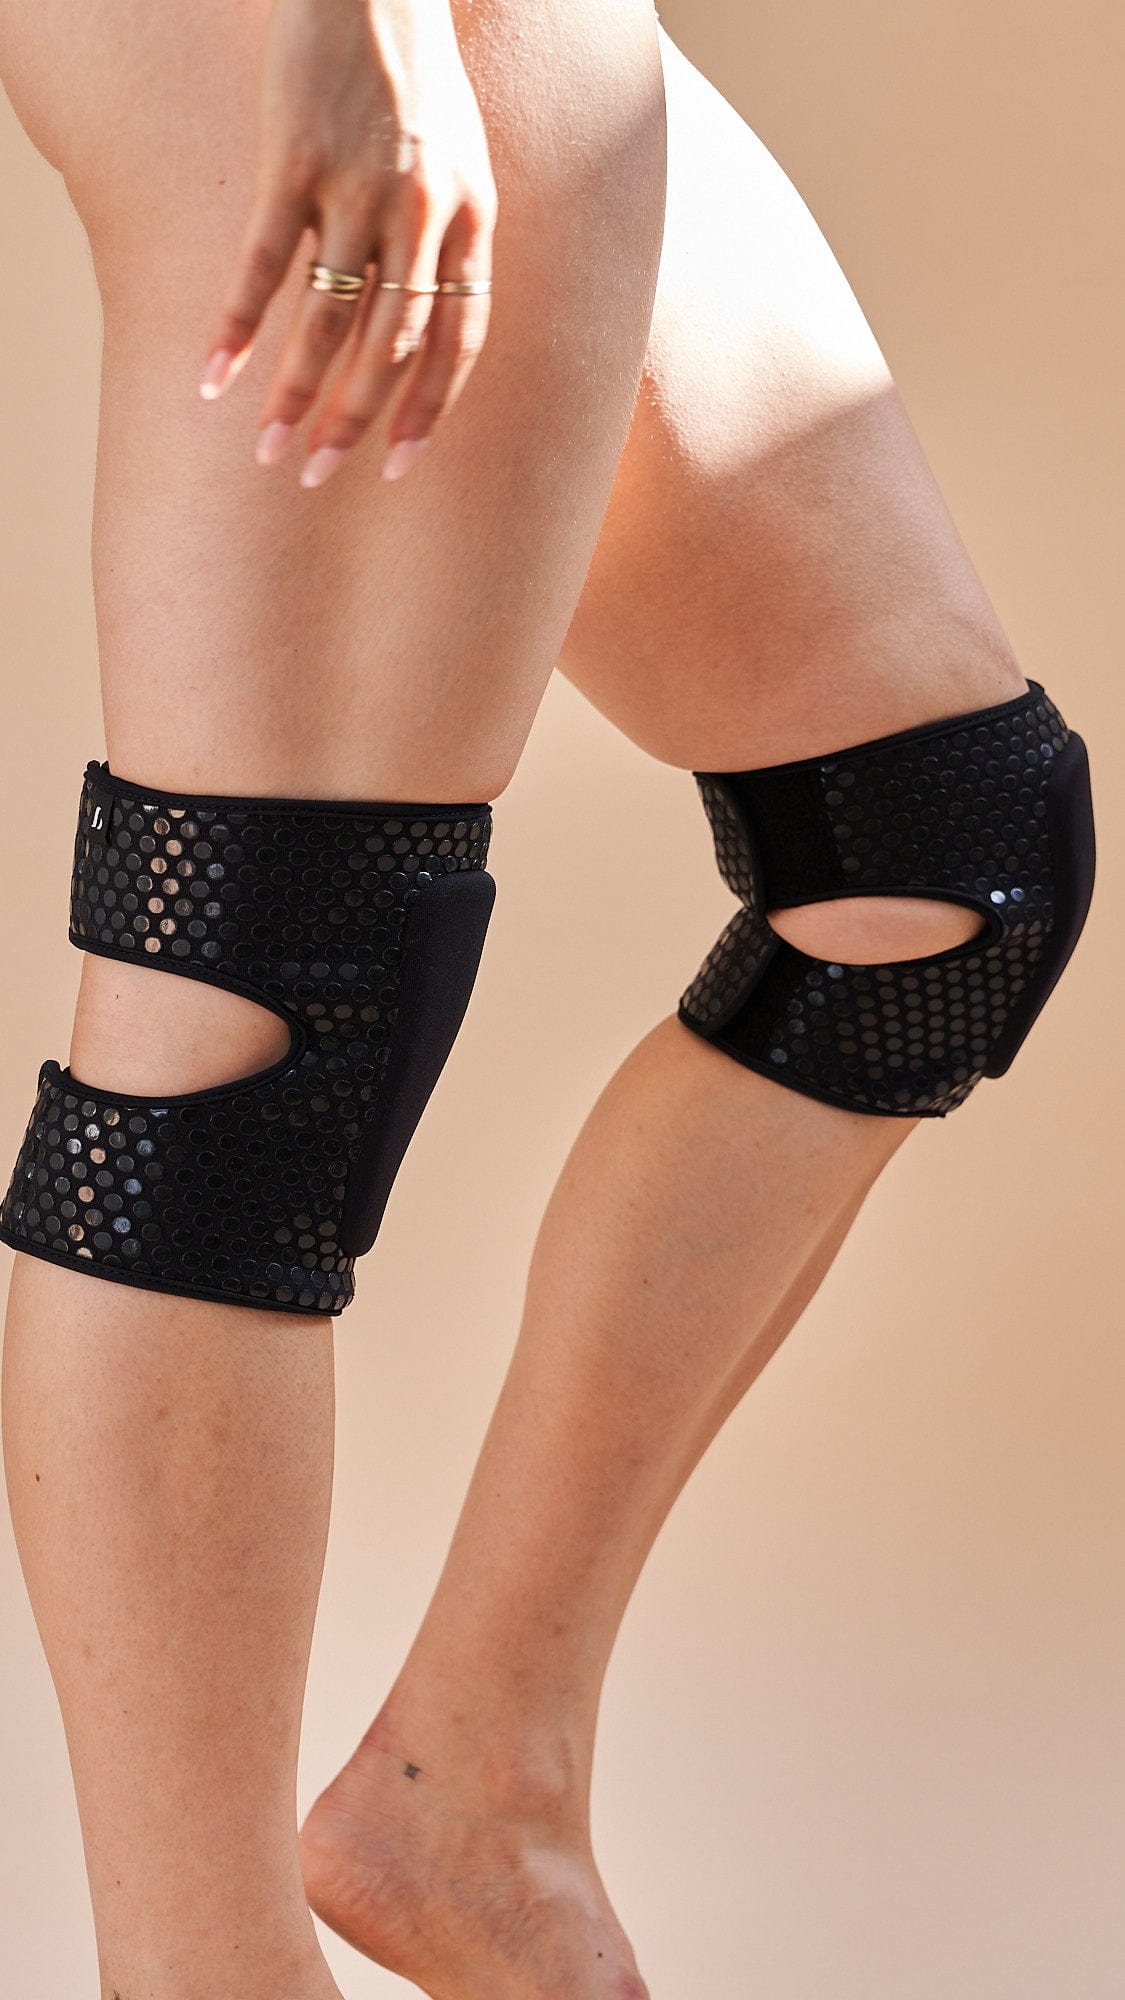 Velcro Sticky Grip Knee Pads (Black)